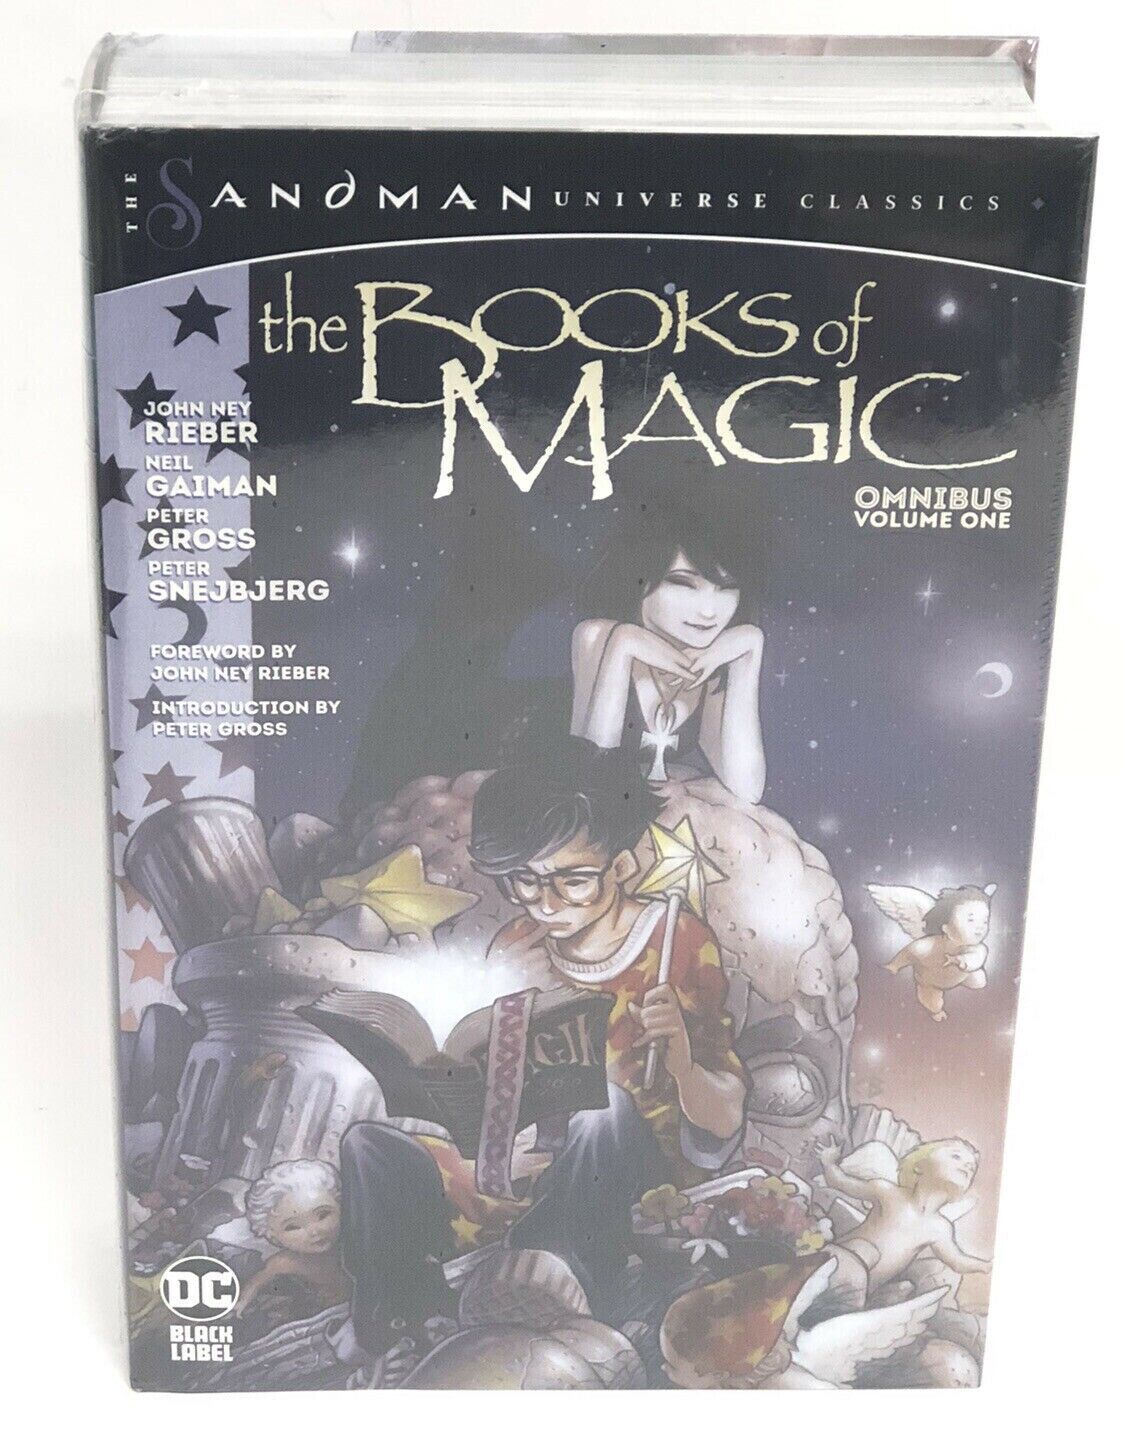  Books of Magic Omnibus Vol 1 DC Comics Black Label New Sealed Sandman Universe